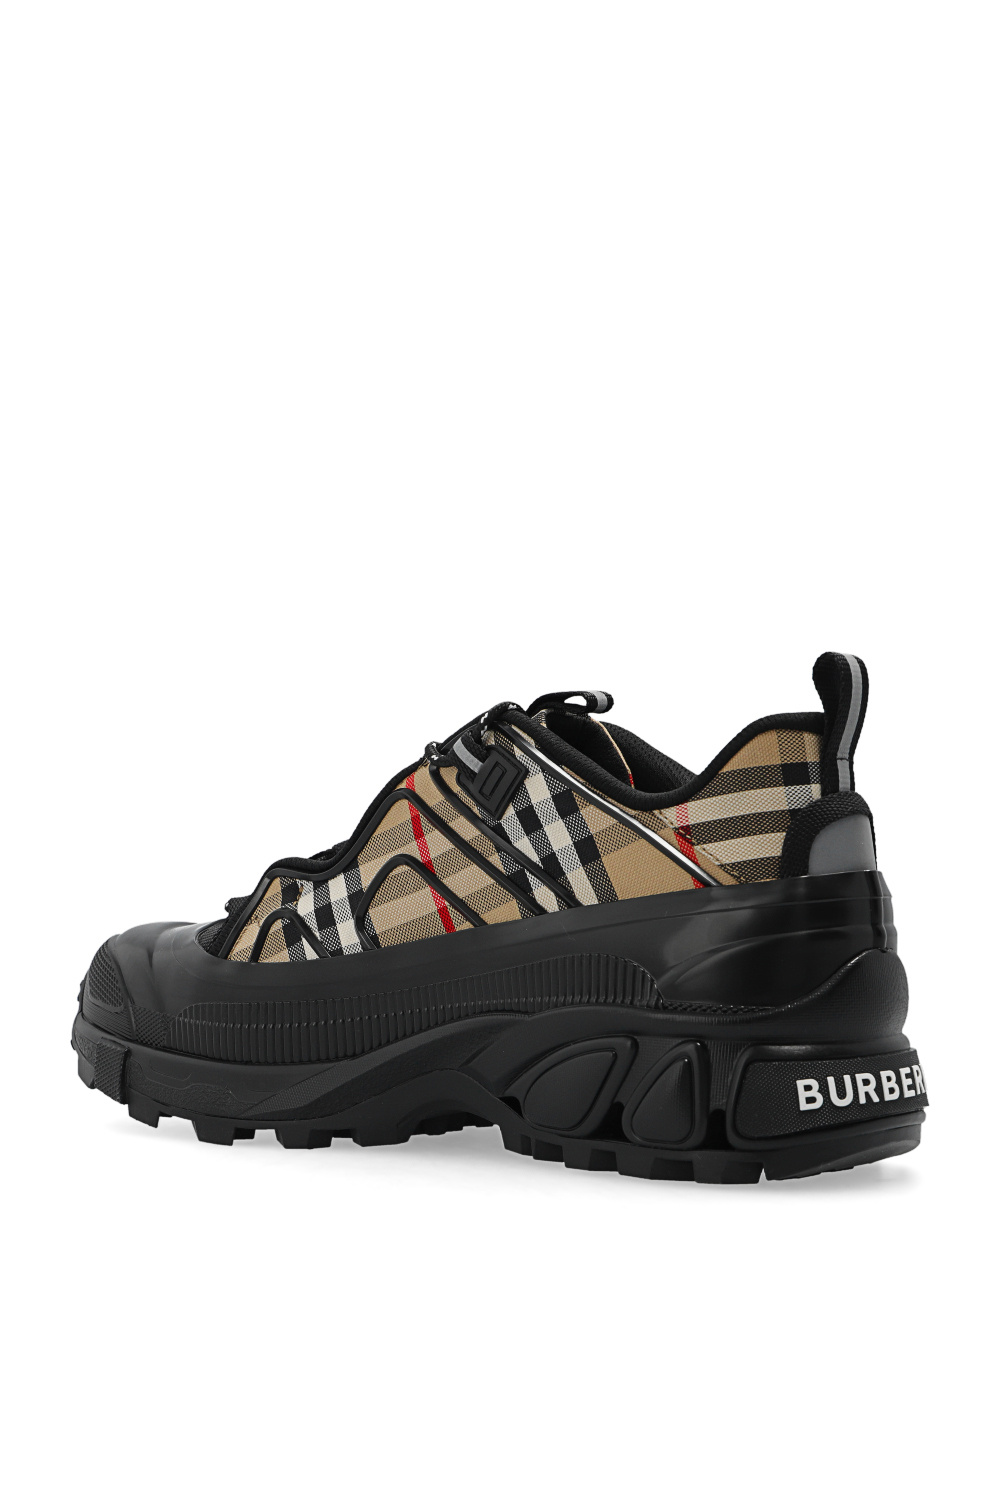 burberry print ‘Arthur’ sneakers